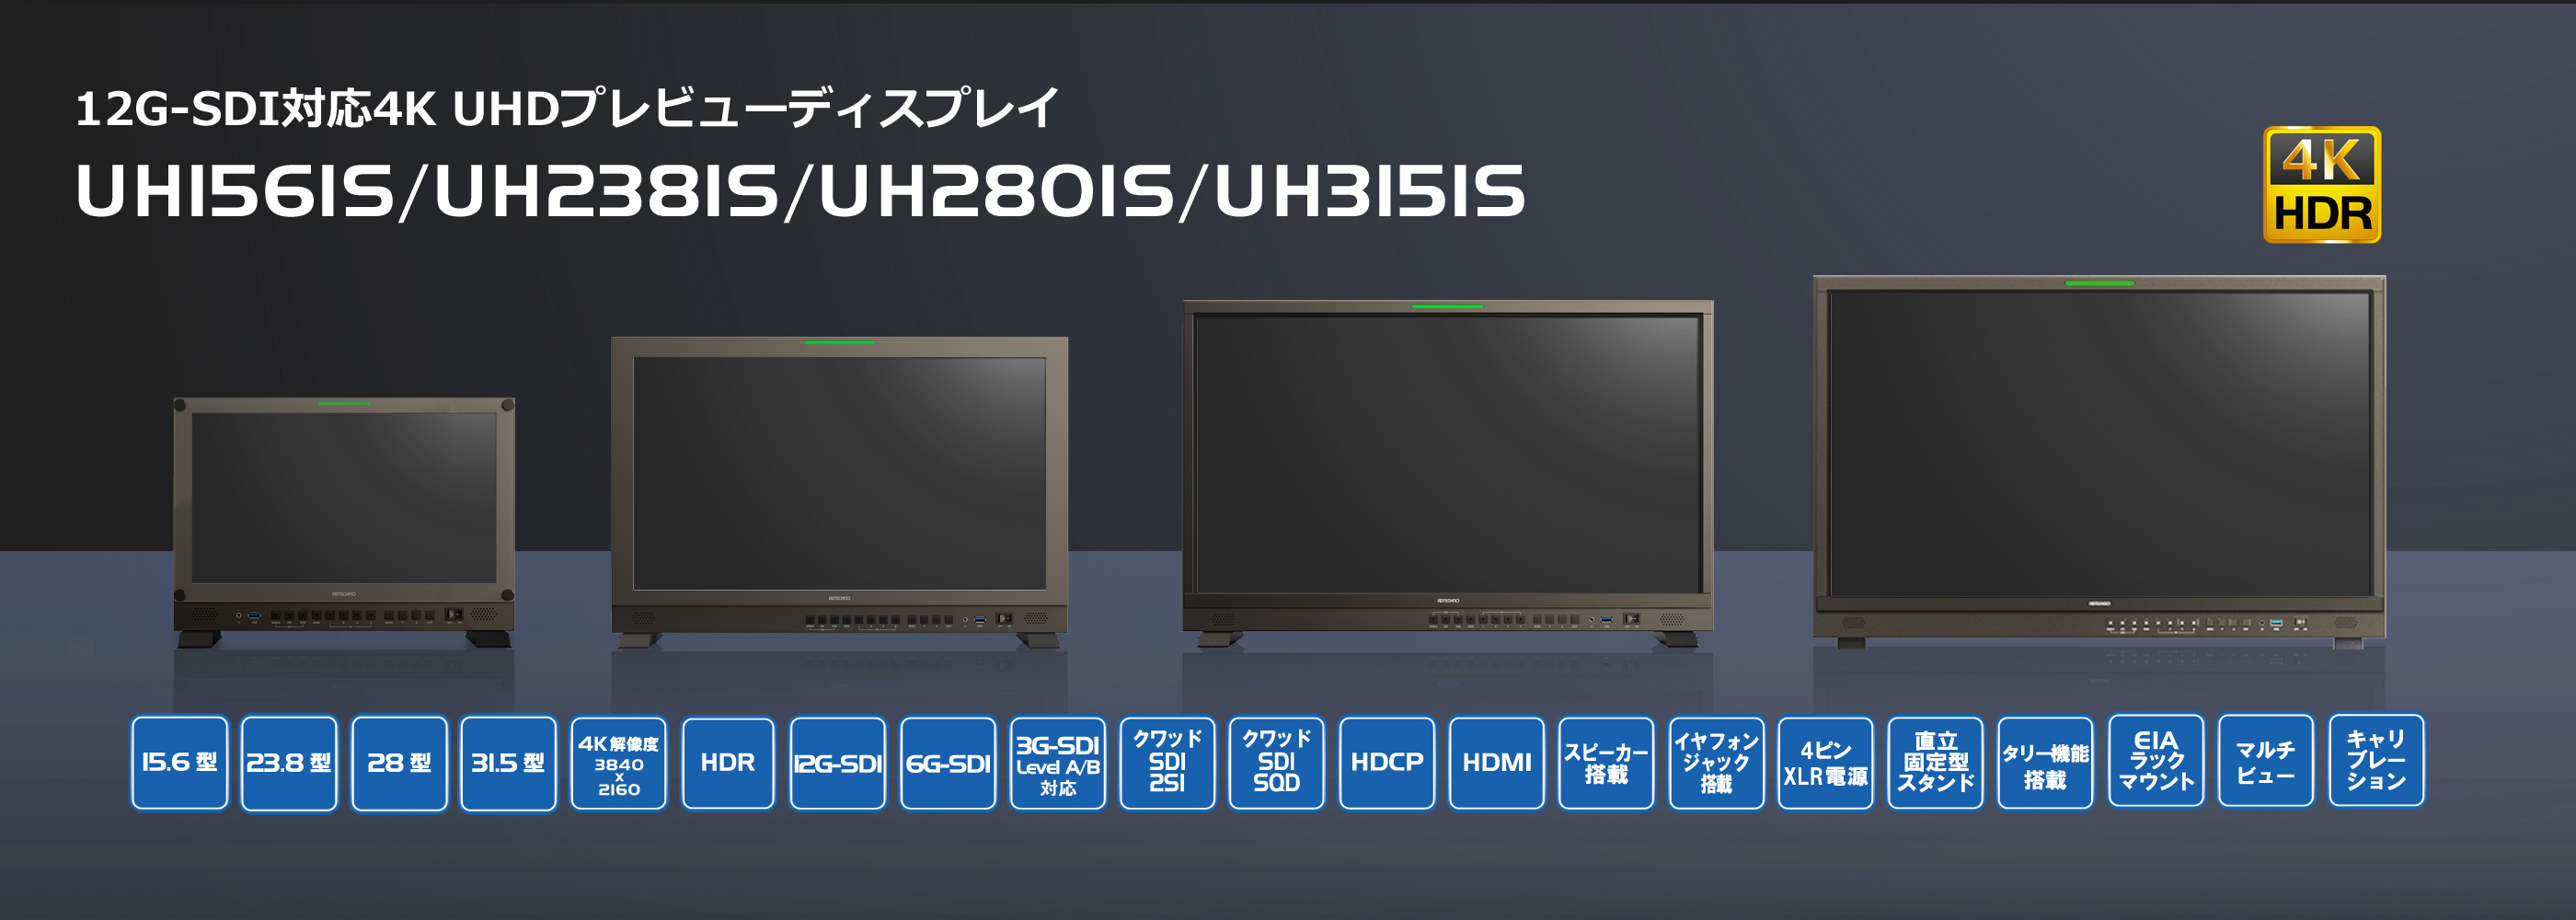 12G-SDI対応4K UHDプレビューディスプレイ 15.6型、23.8型、28.0型、31.5型